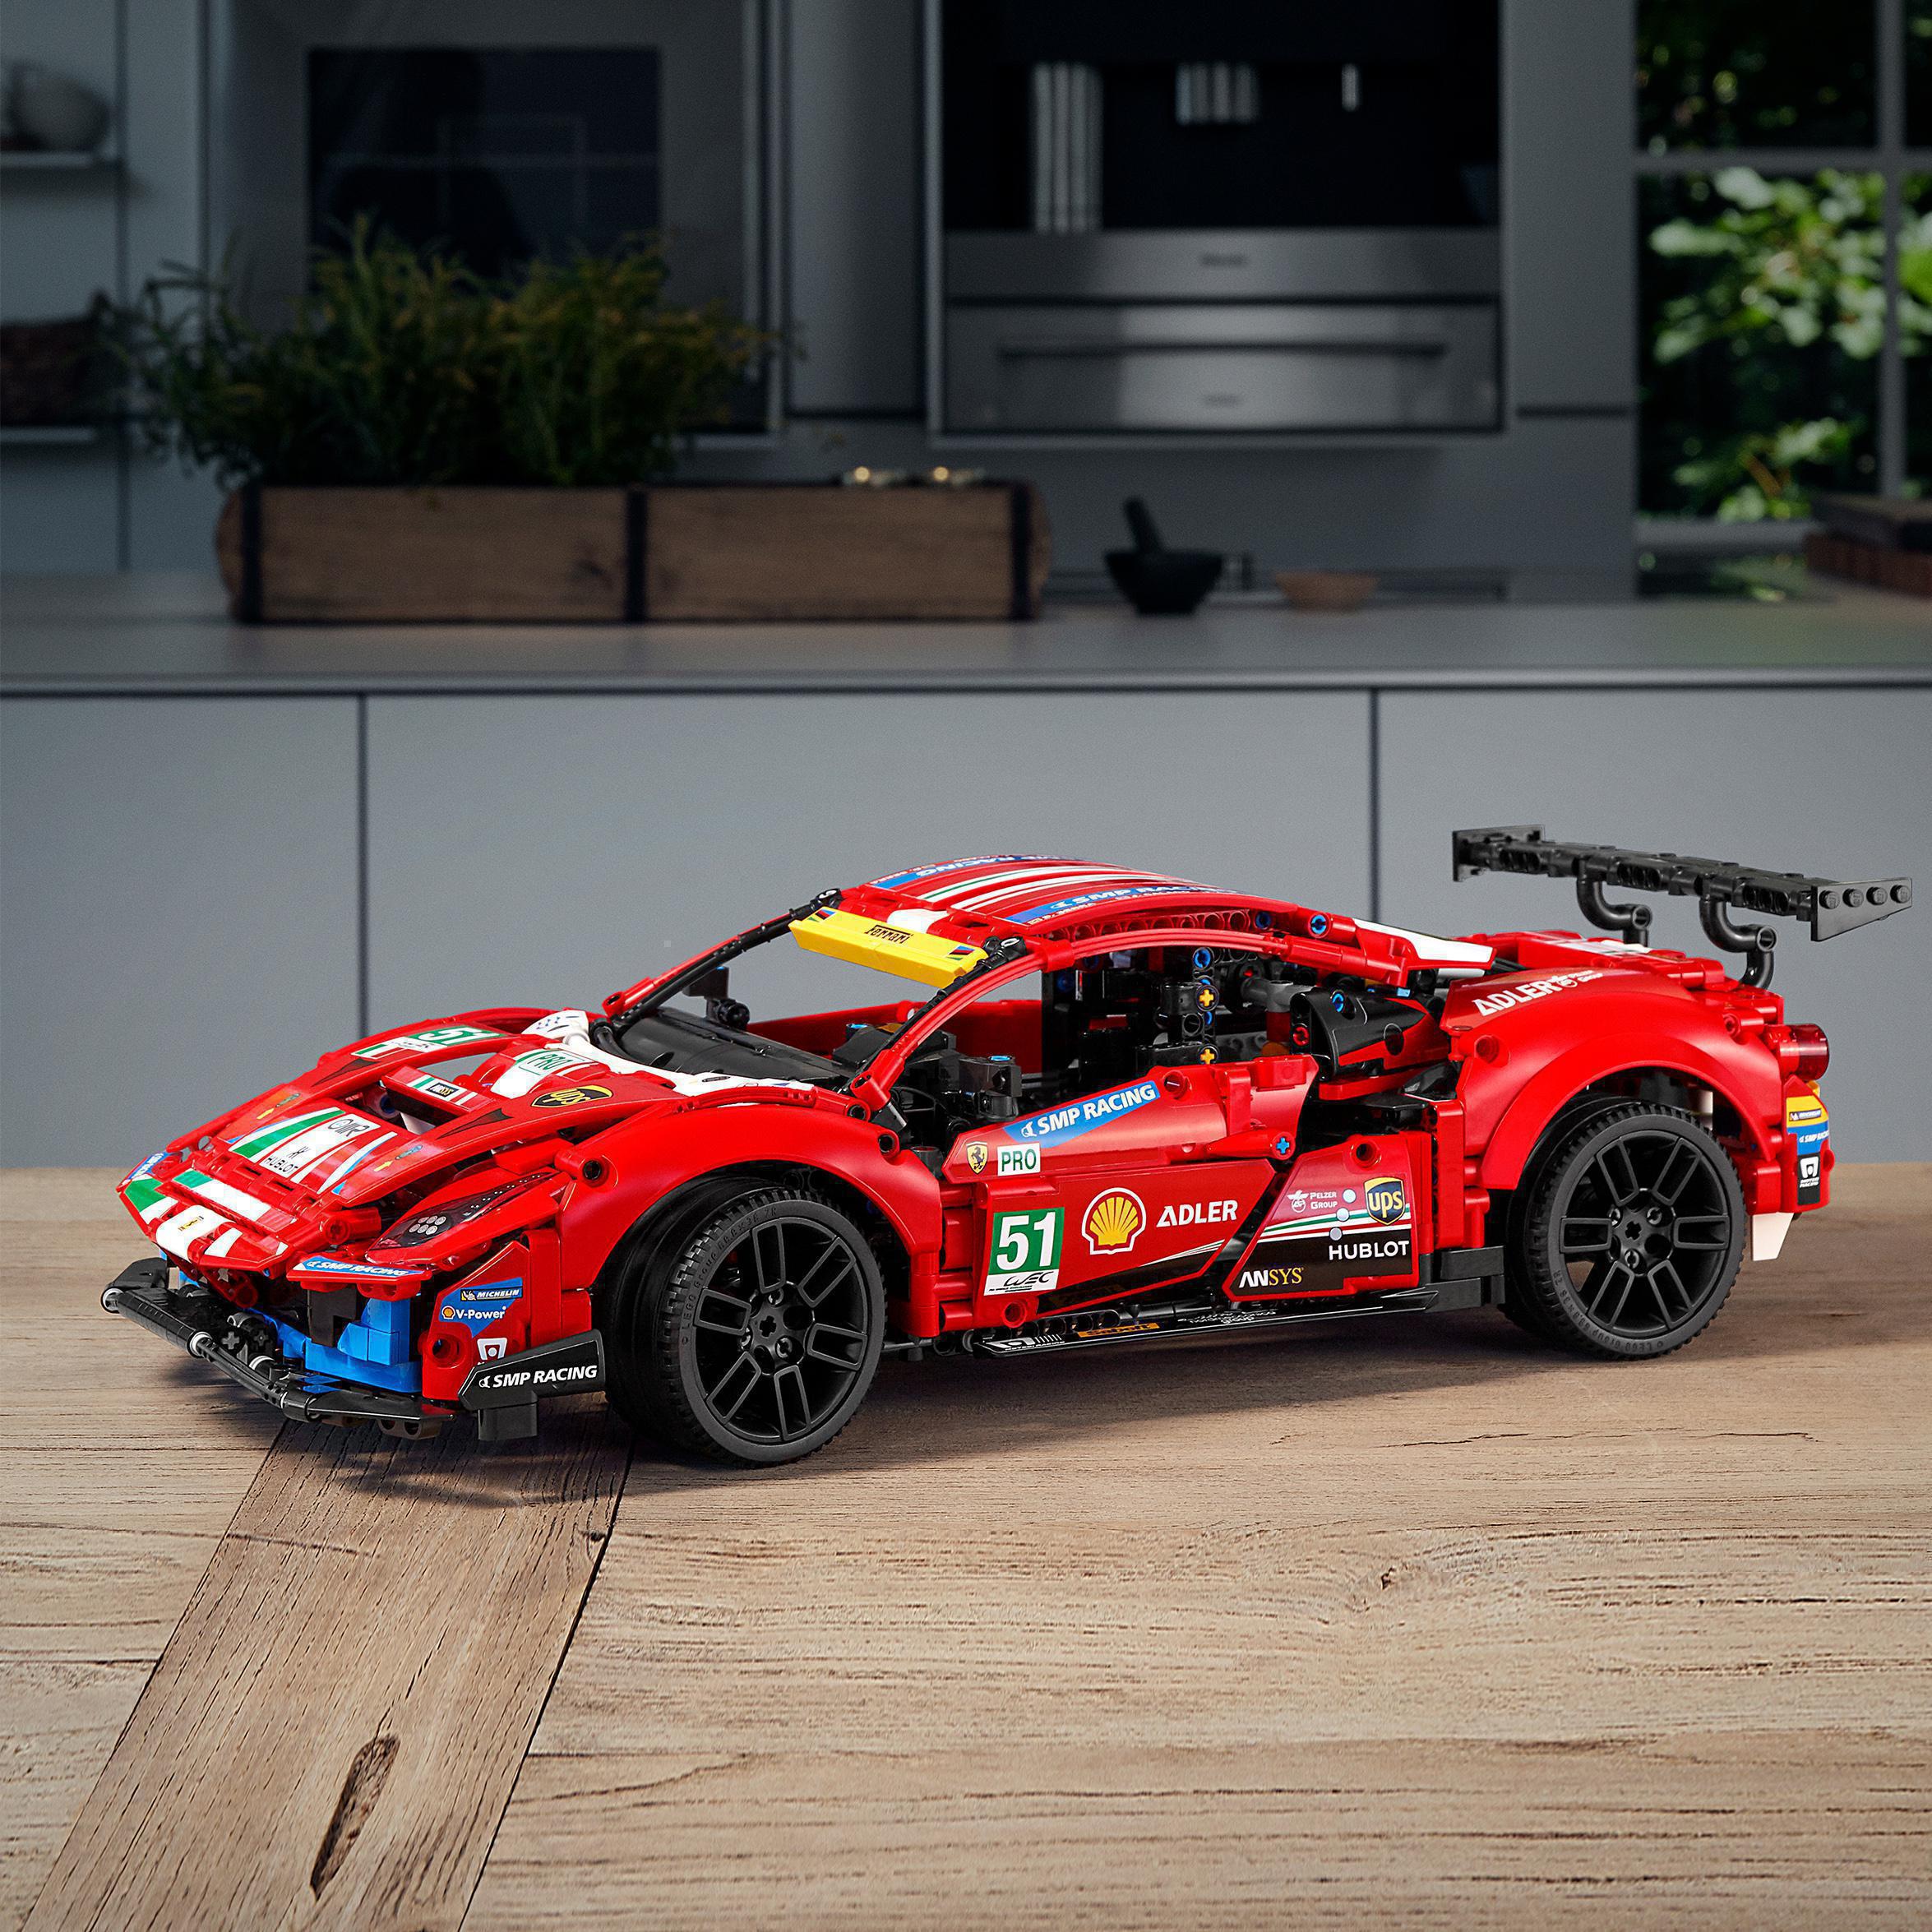 Конструктор LEGO Technic Ferrari 488 GTE AF Corse №51, 1677 деталей (42125) - фото 14